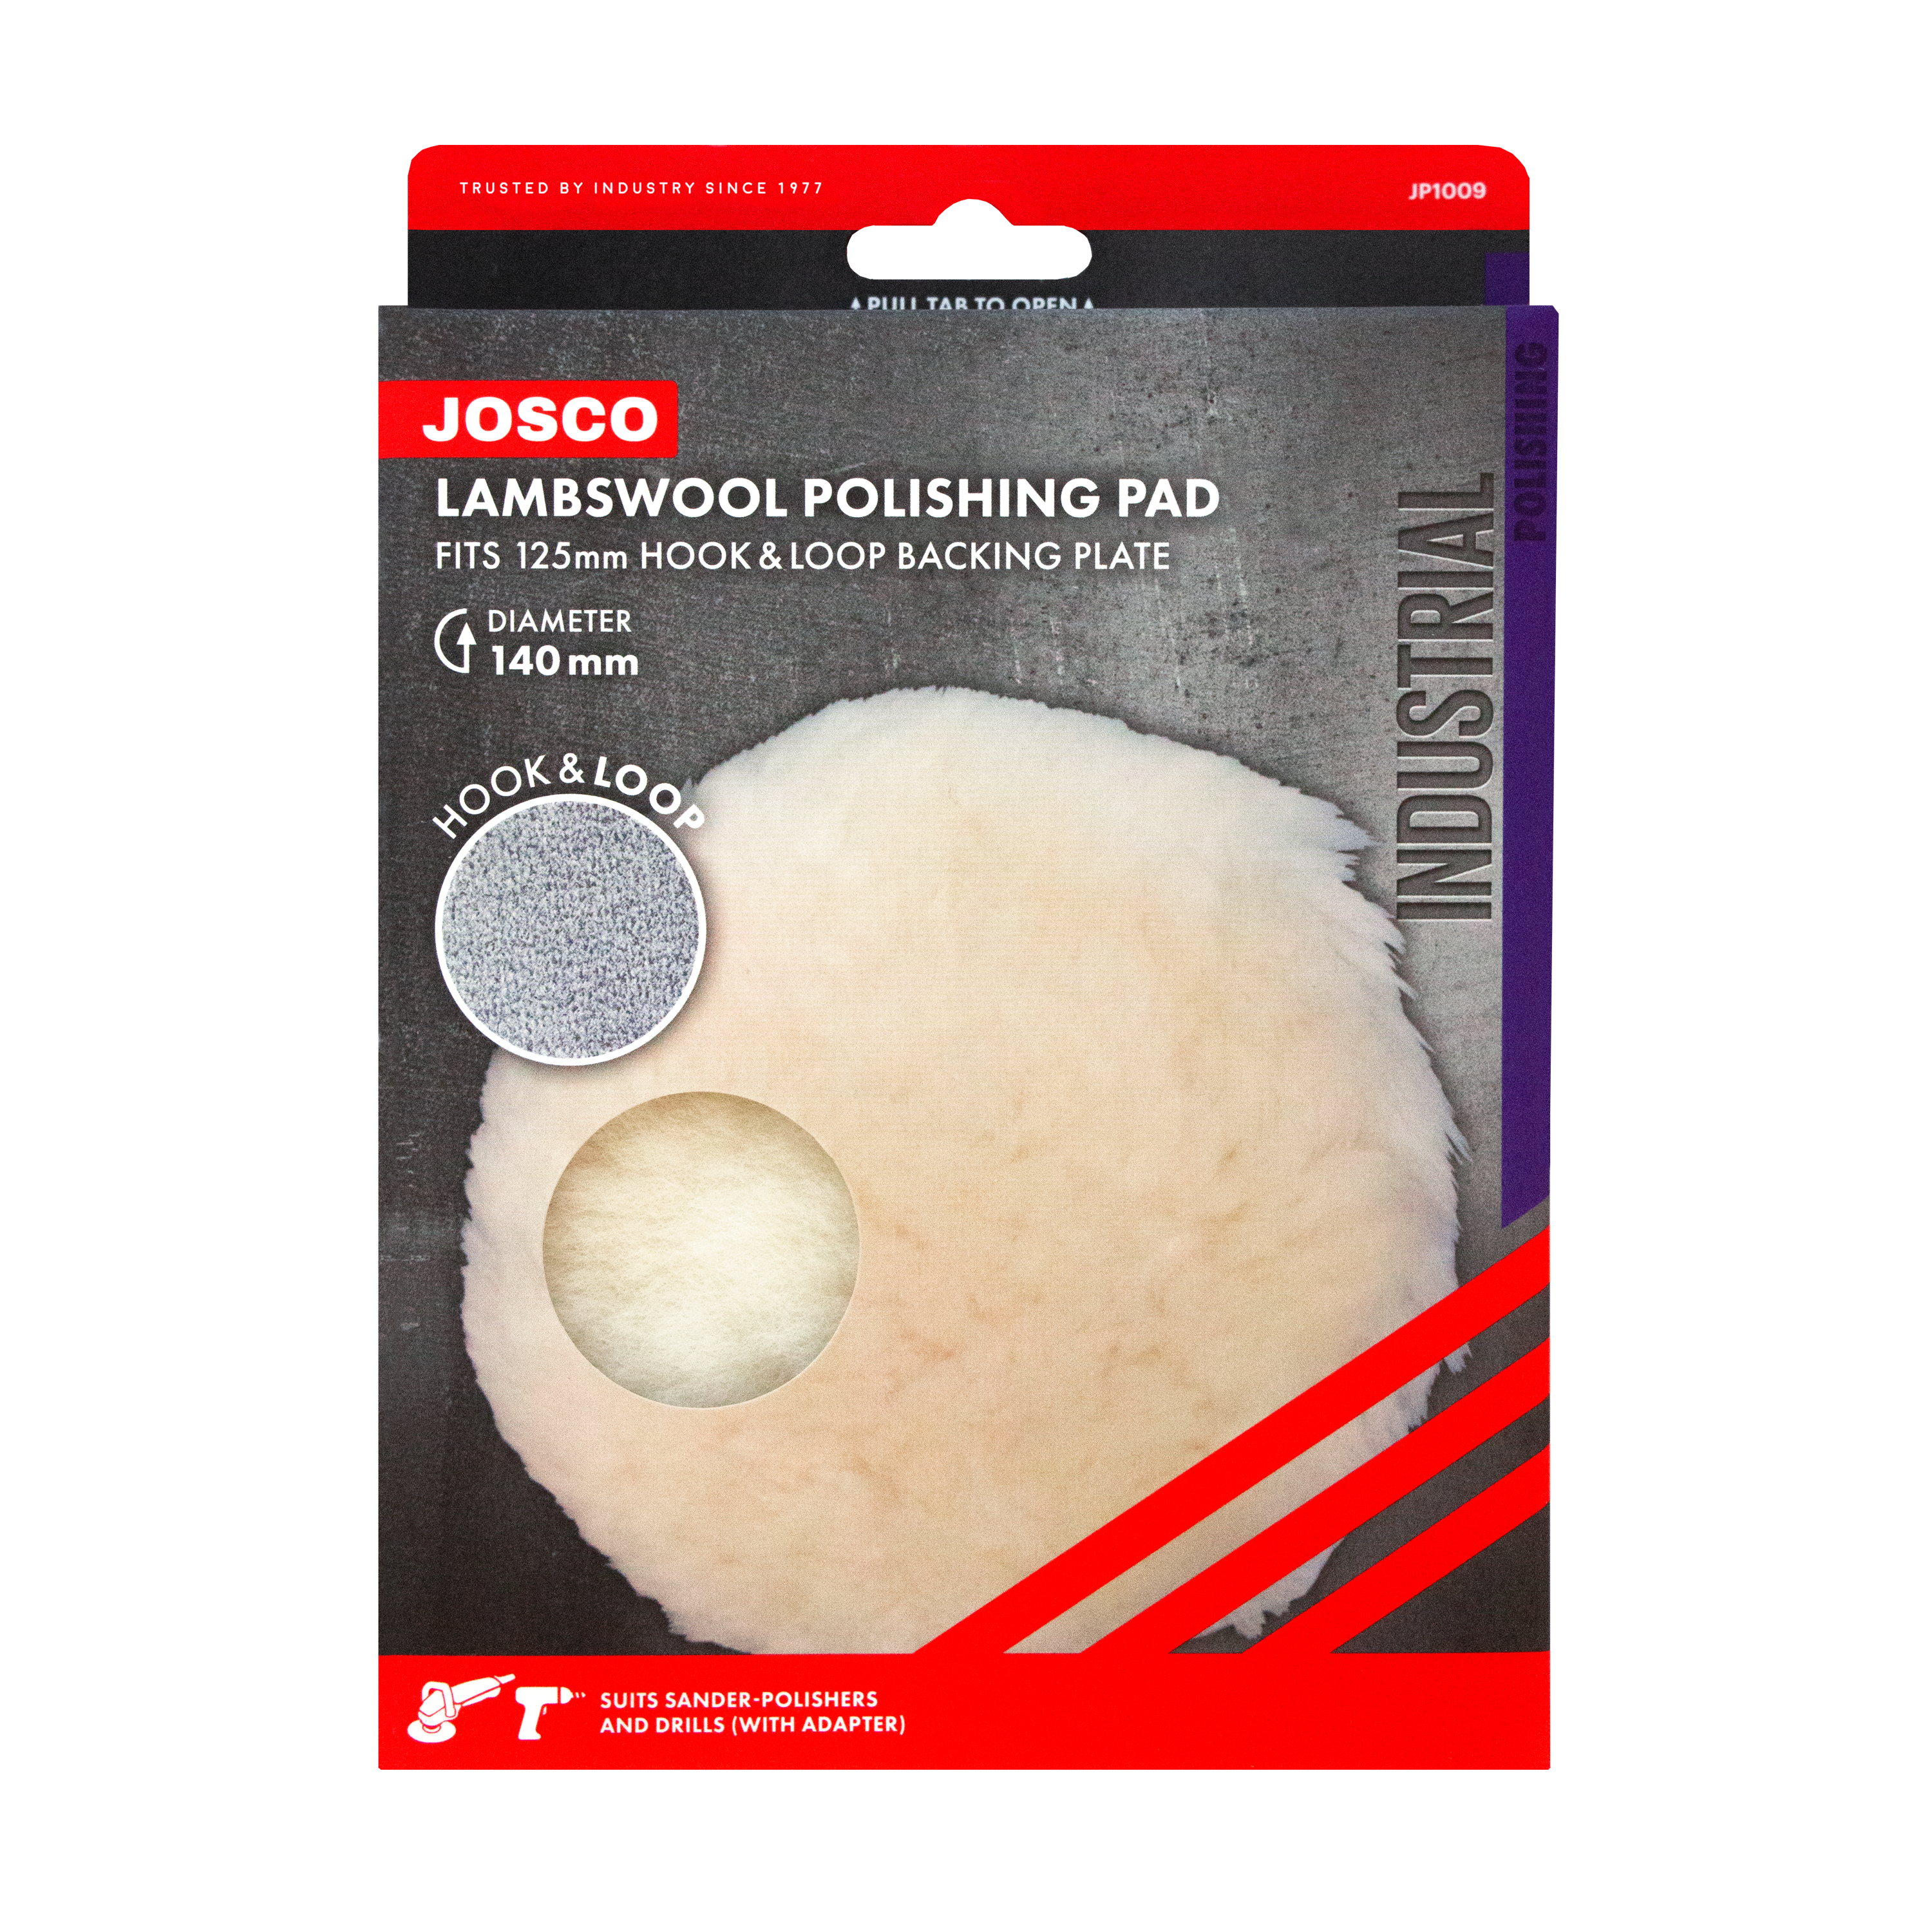 125mm Lambswool Bonnet Polishing Pad Disc with Hook & Loop Backing JP1009 by Josco